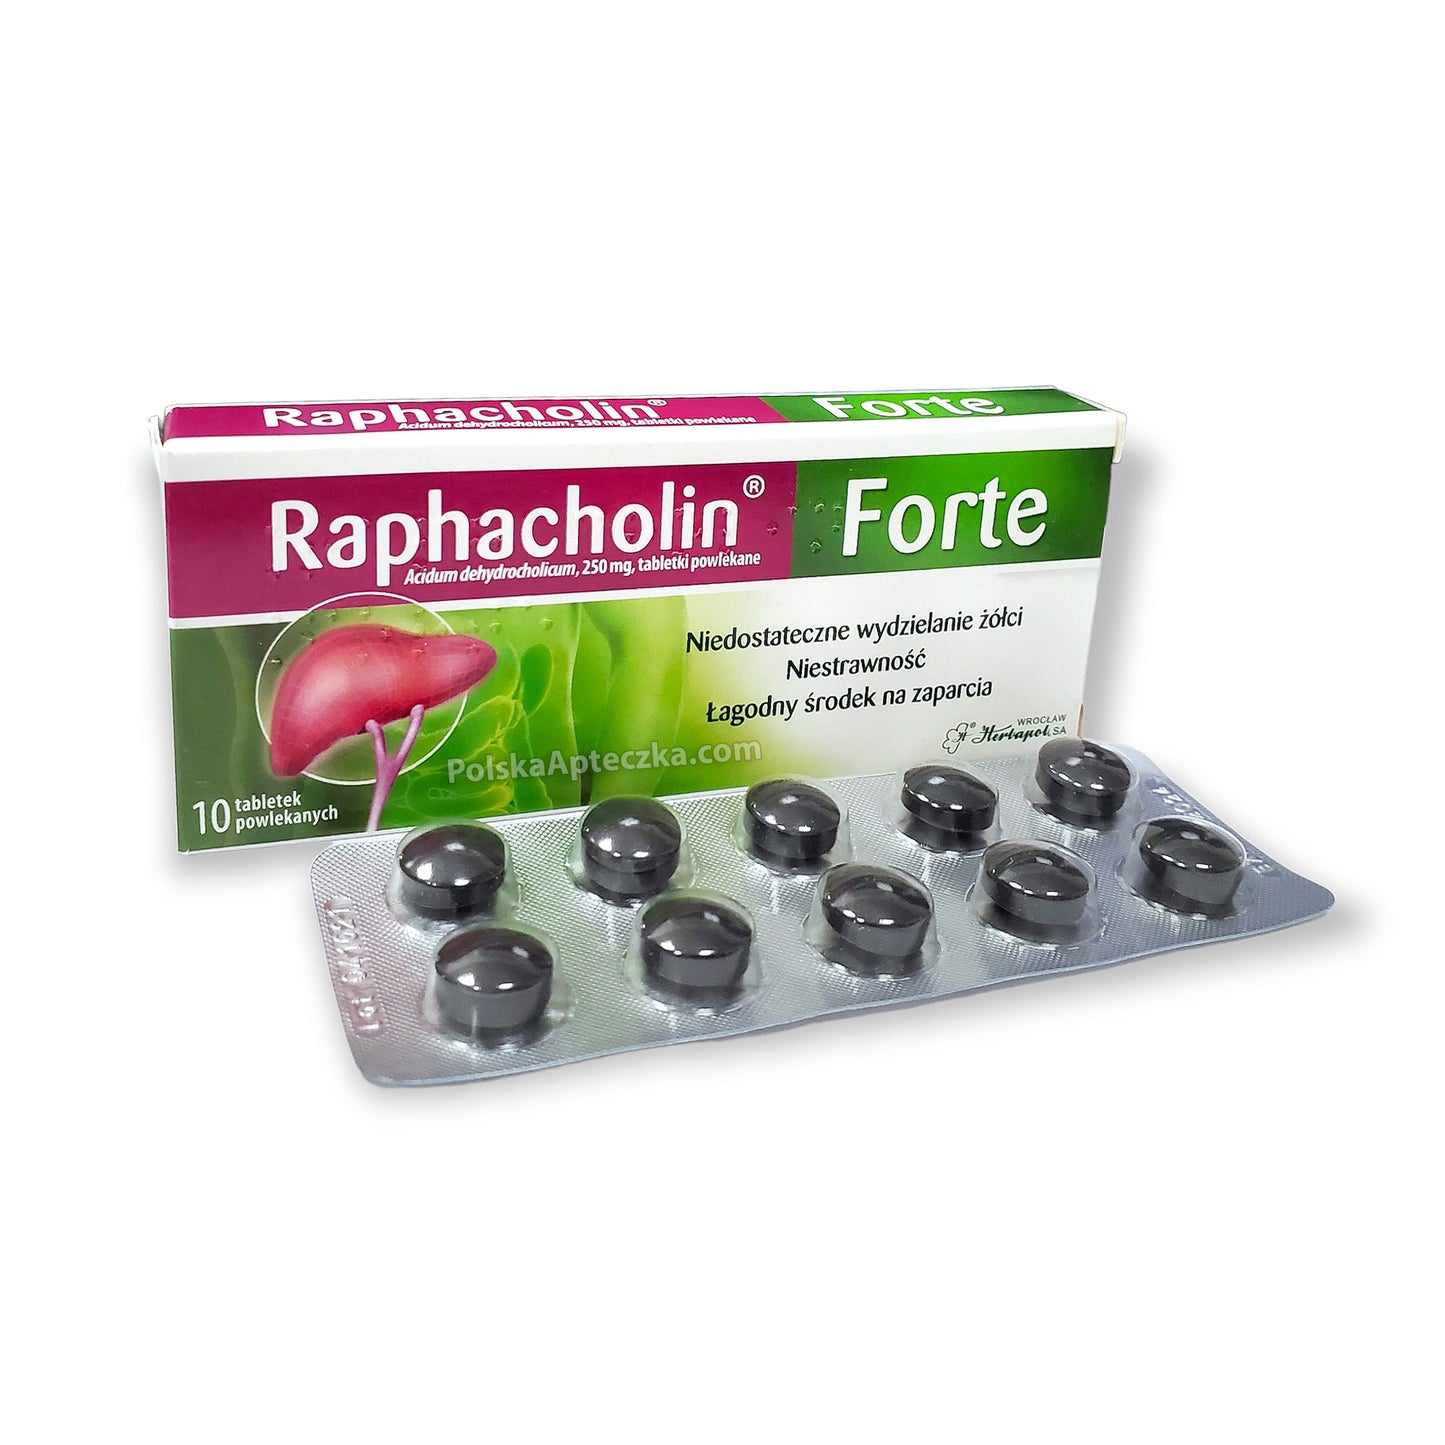 Raphacholin Forte tablets